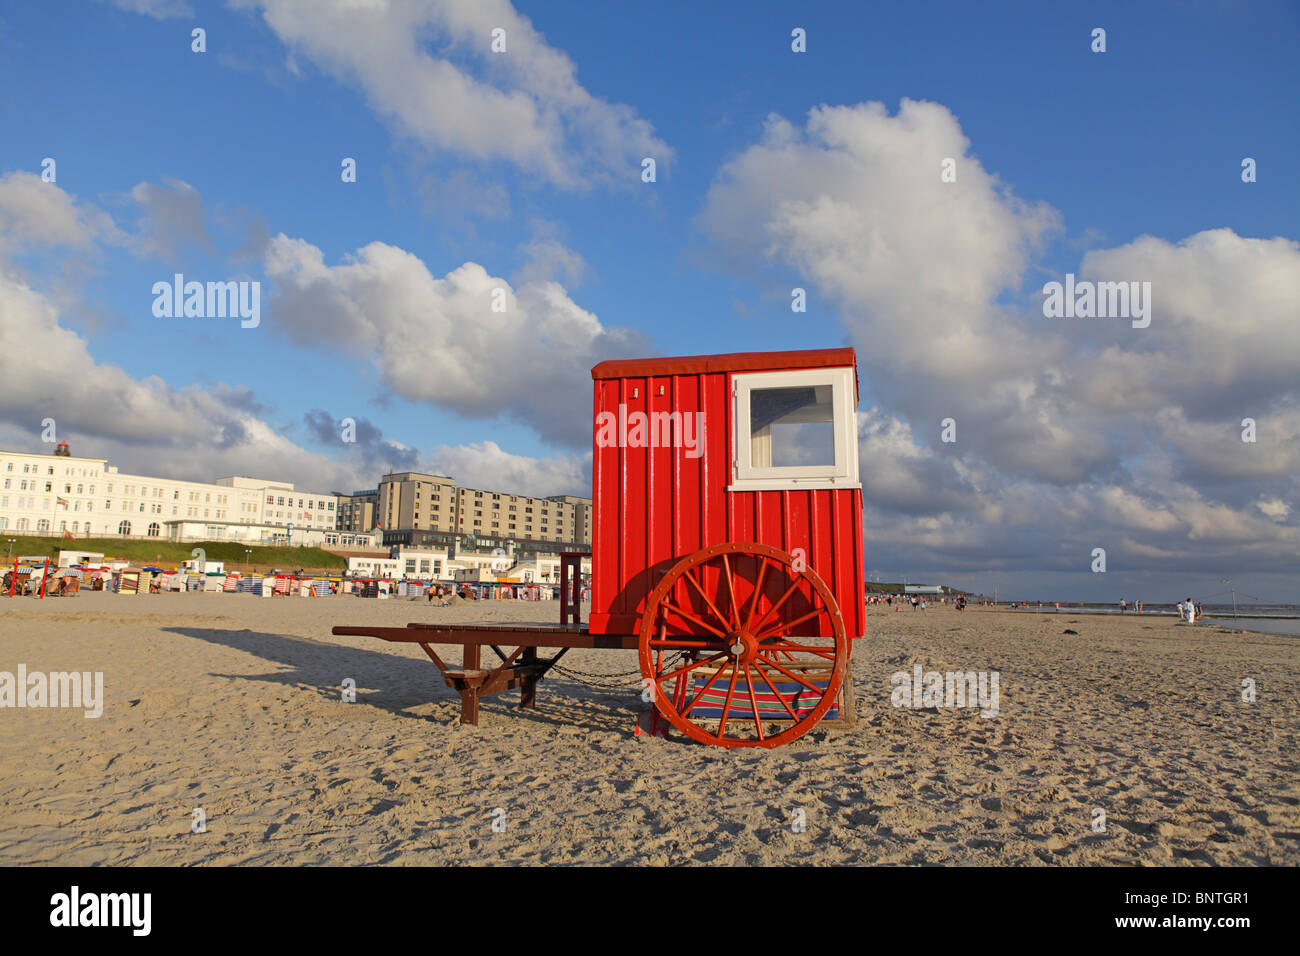 beach carriage at the beach of Borkum Town, Borkum Island, East Friesland, North Sea Coast, Lower Saxony, Germany Stock Photo